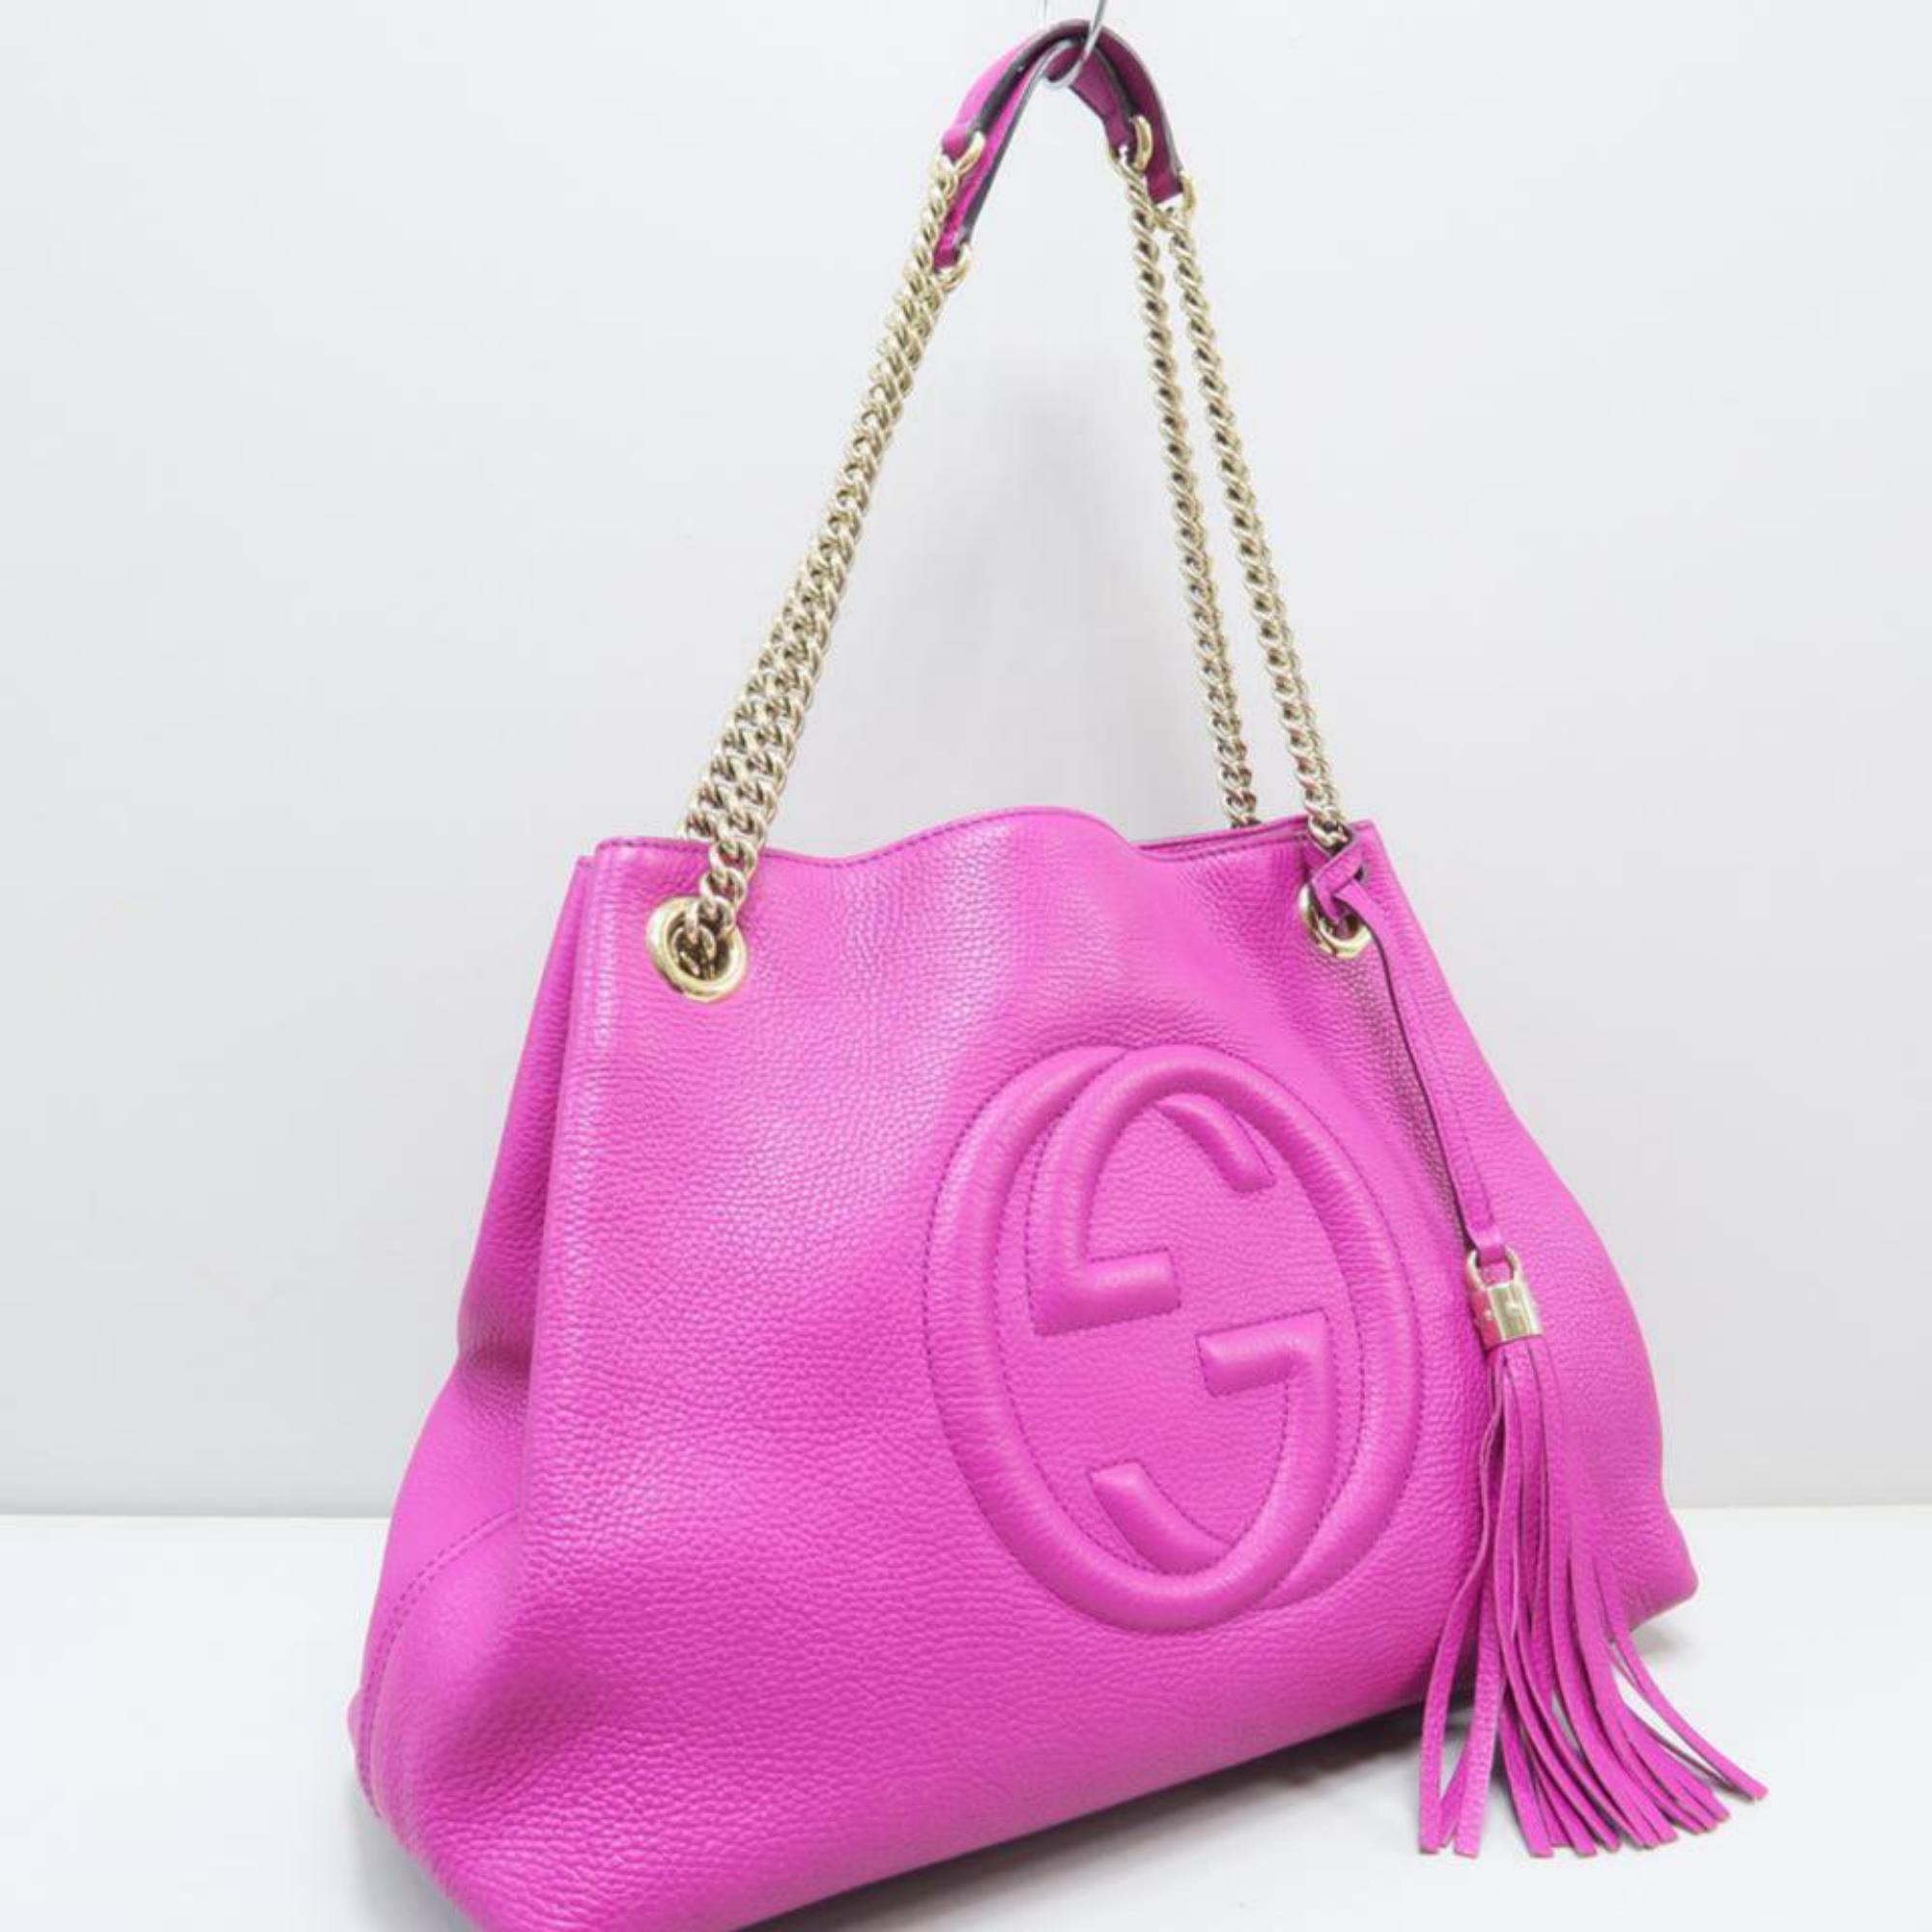 Gucci Soho Fringe Tassel Fuchsia Chain Tote 869084 Pink Leather Shoulder Bag 4